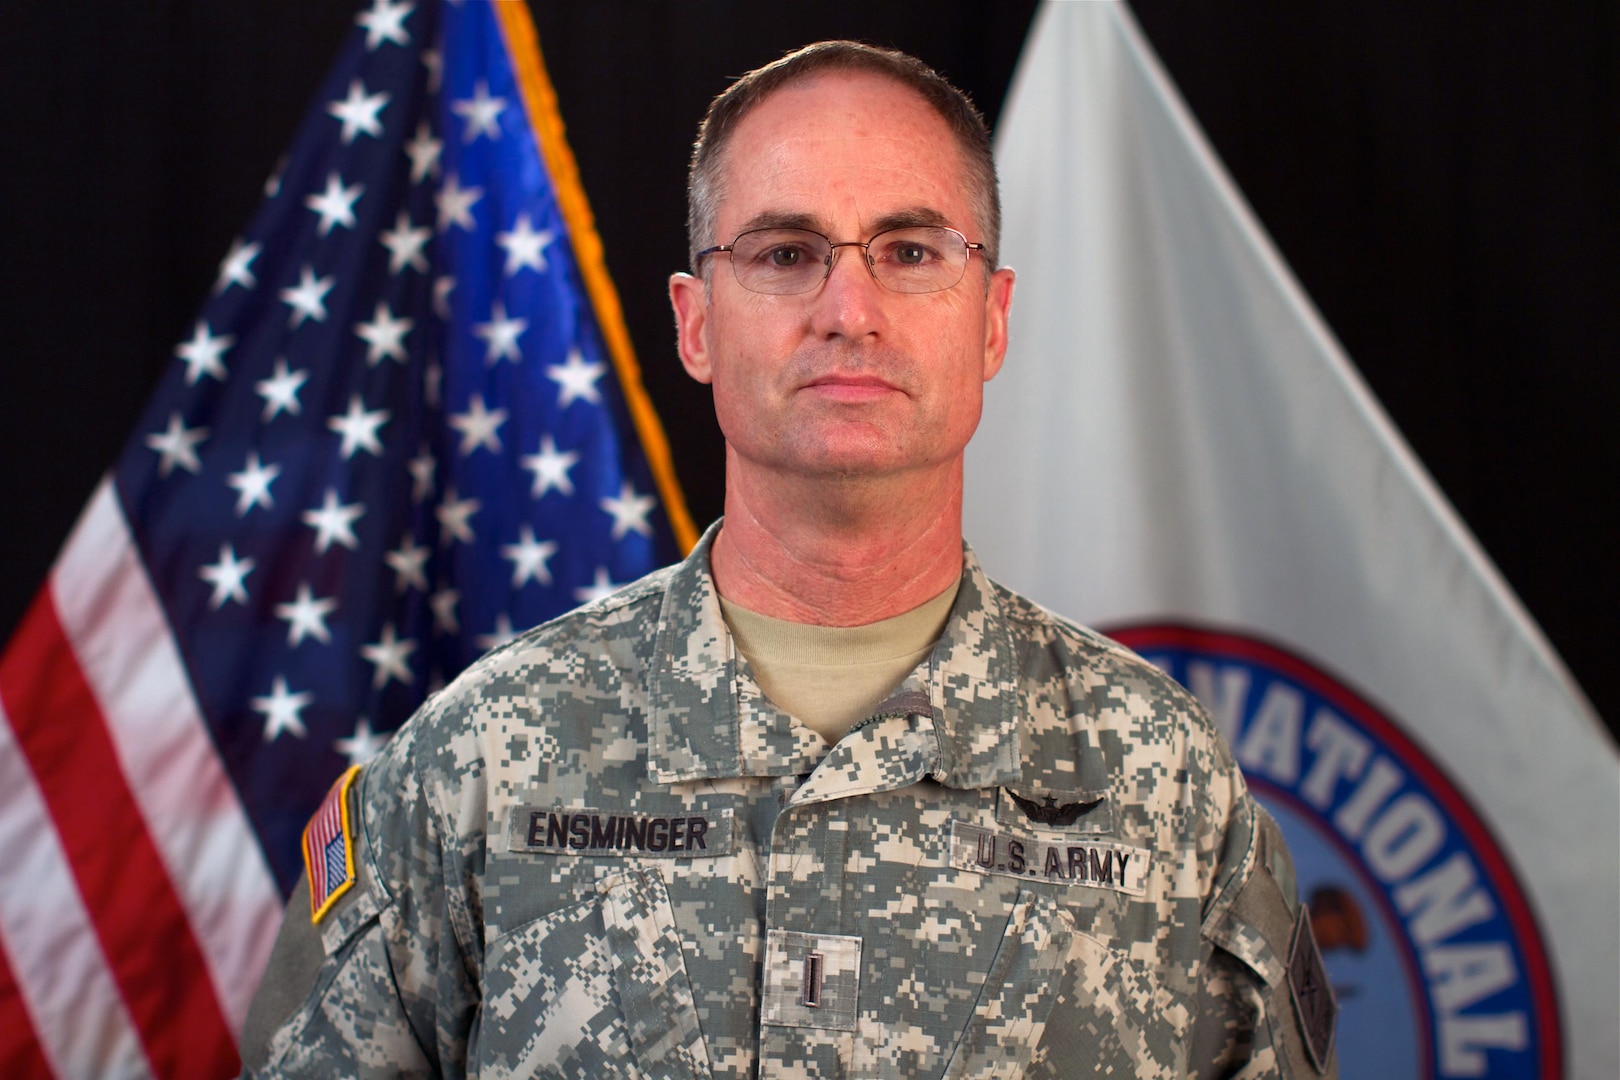 Chief Command Warrant Officer Gary Ensminger began his new duties Oct. 29.